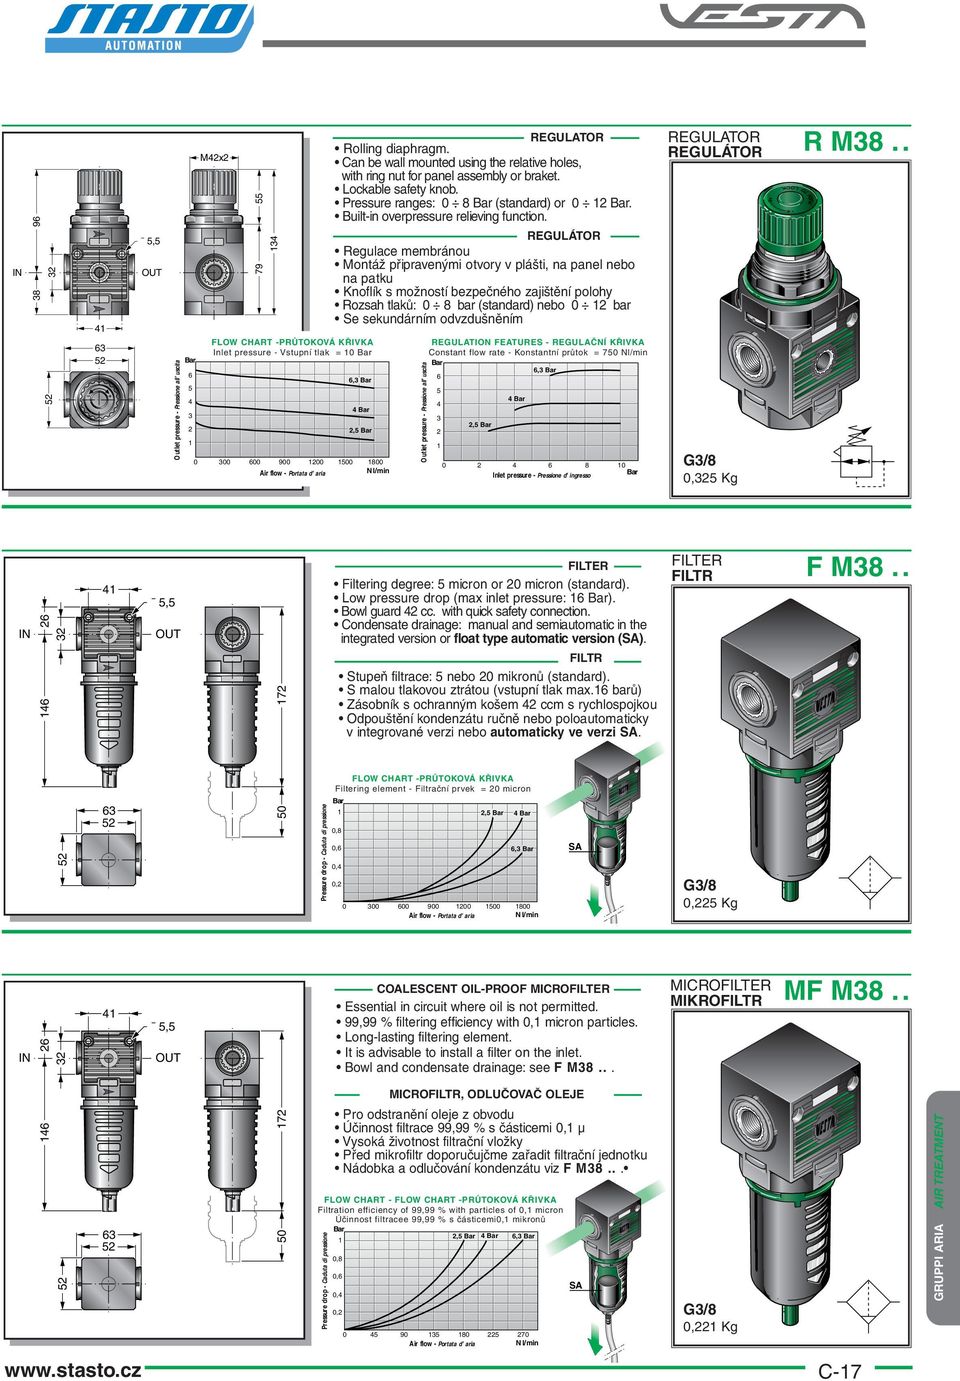 Lockable safety knob. Pressure ranges: 0 8 (standard) or 0. Built-in overpressure relieving function.